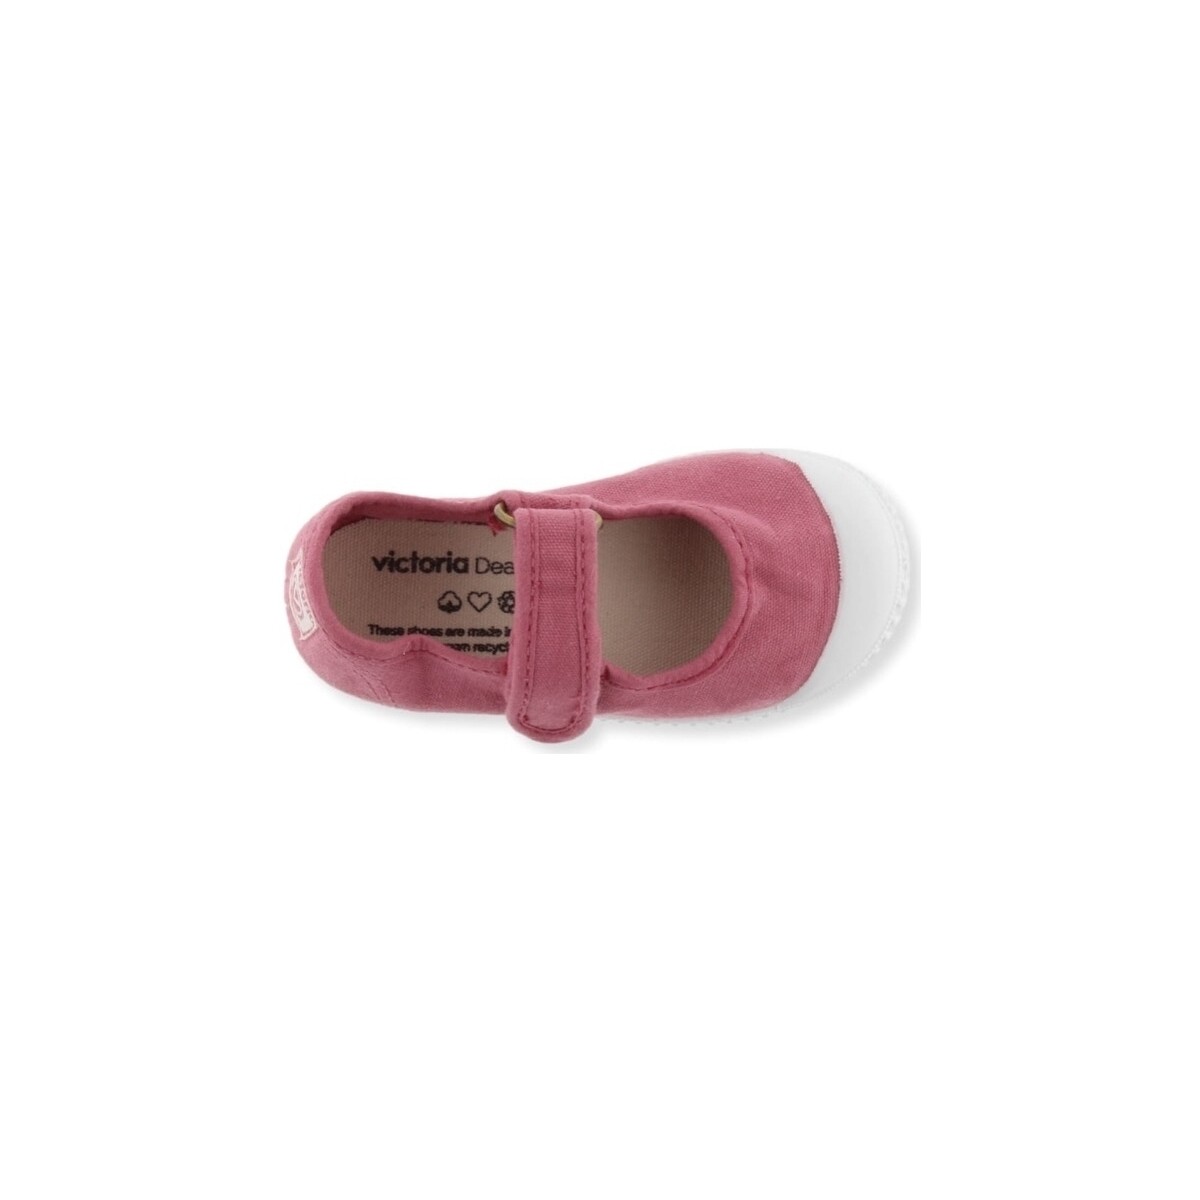 Victoria Rose Baby Shoes 36605 - Framboesa zIdkdT6g